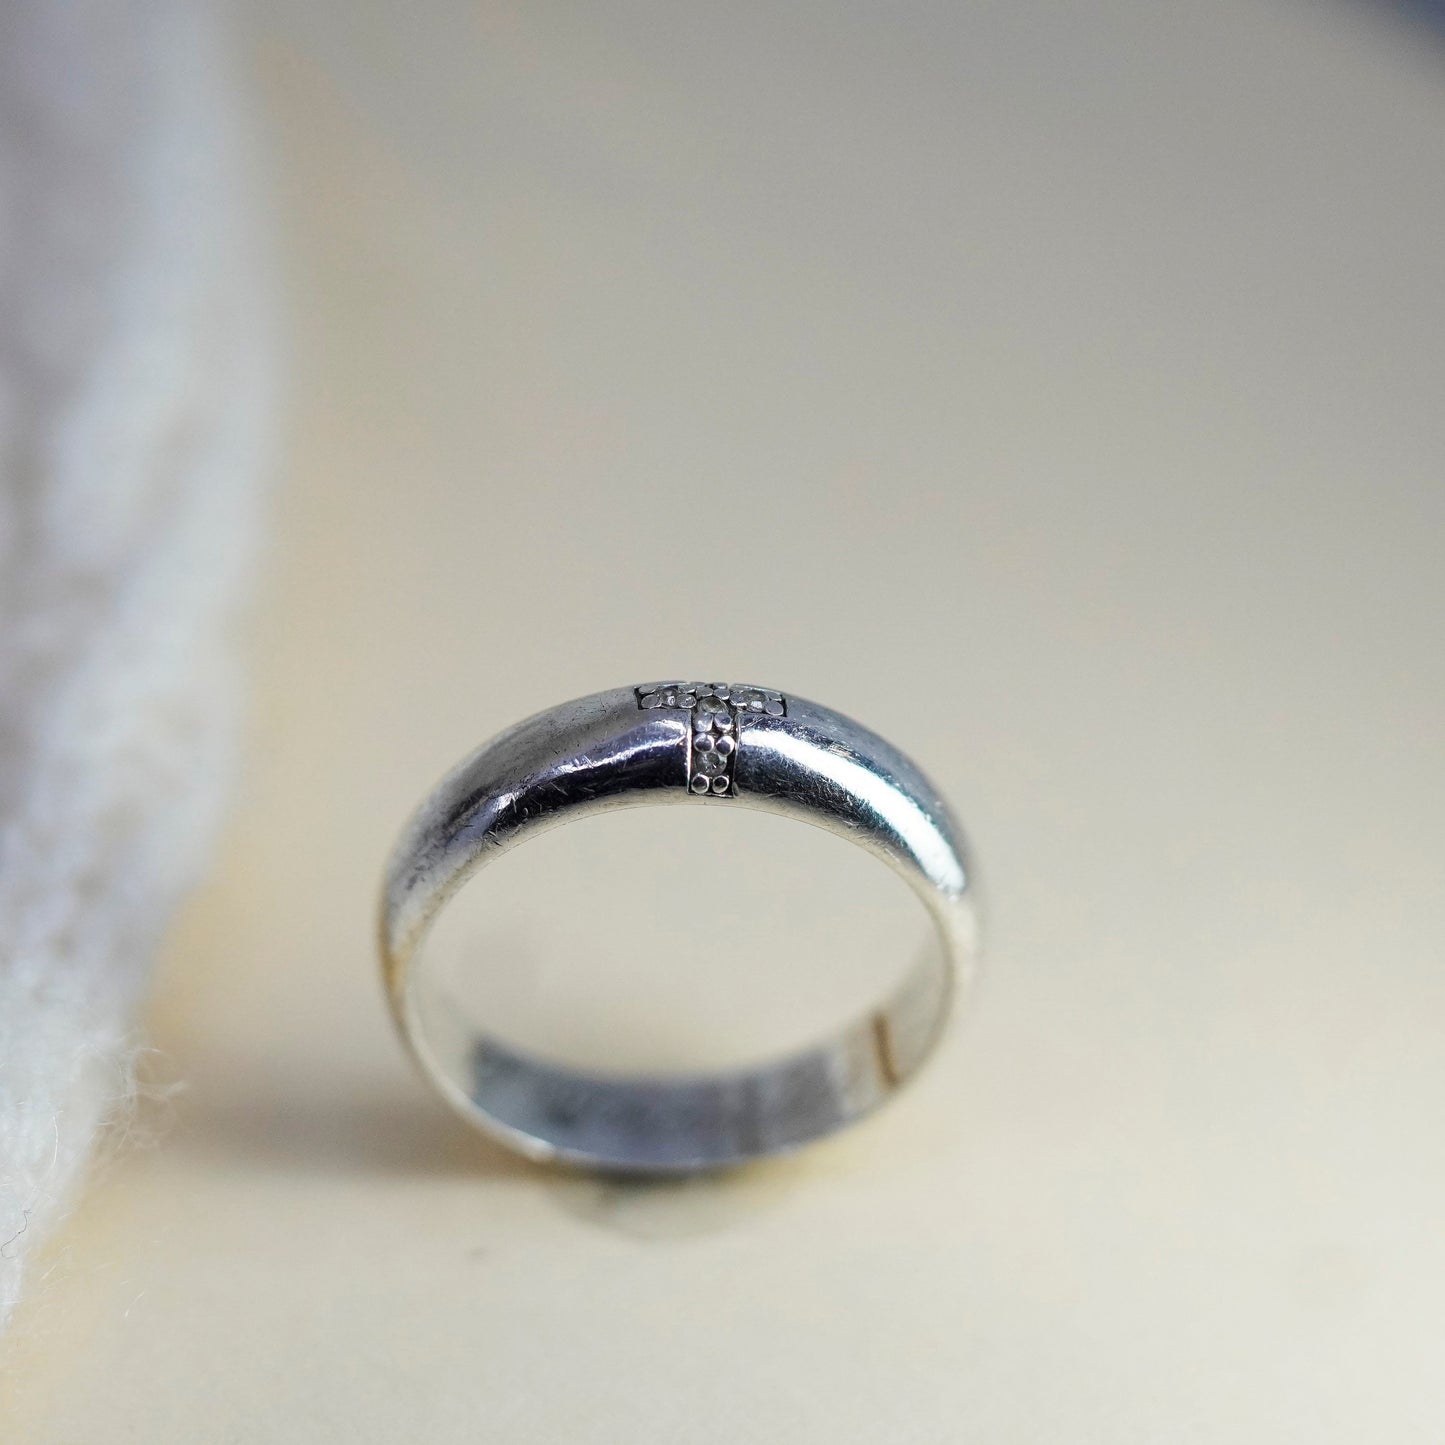 Size 7, Sterling silver ring, 925 diamond cross prayer band